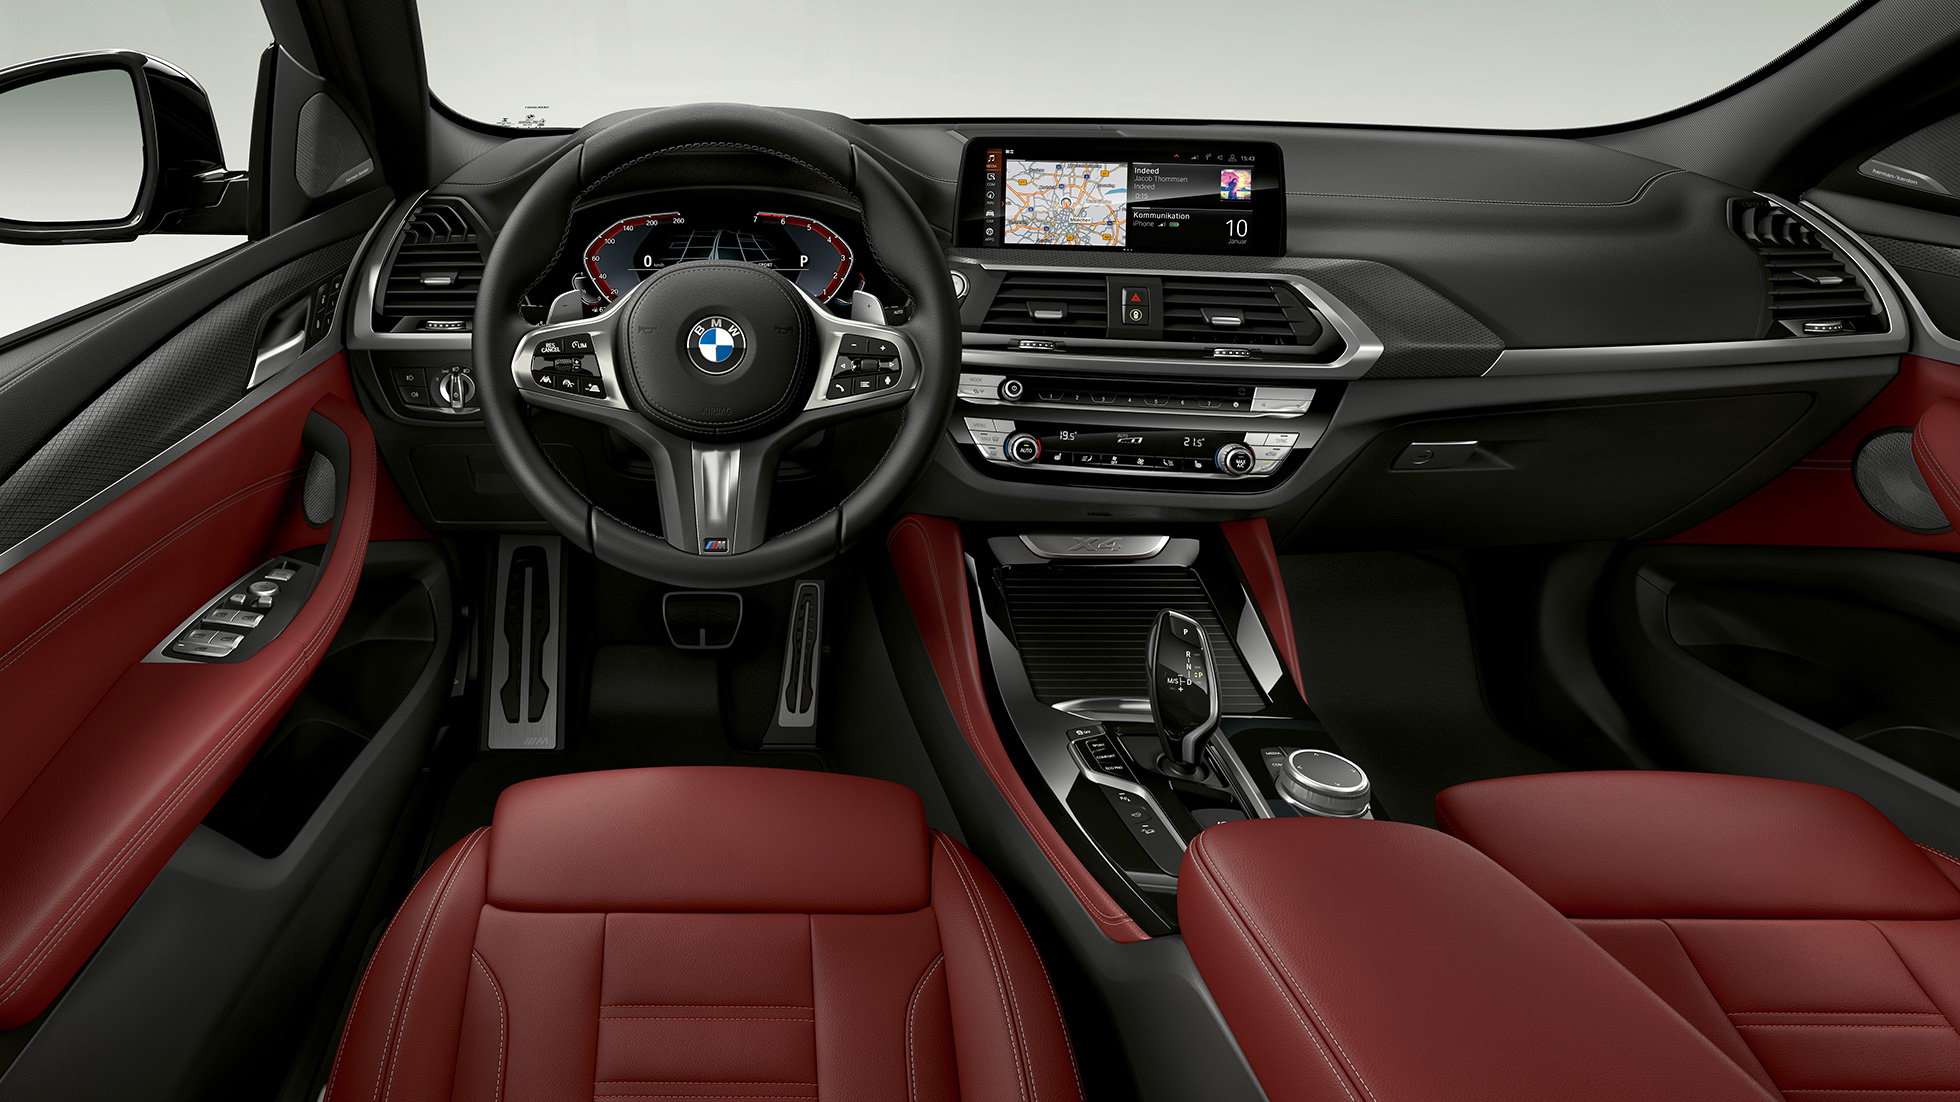 BMW X4 interior - Rear Right Angled